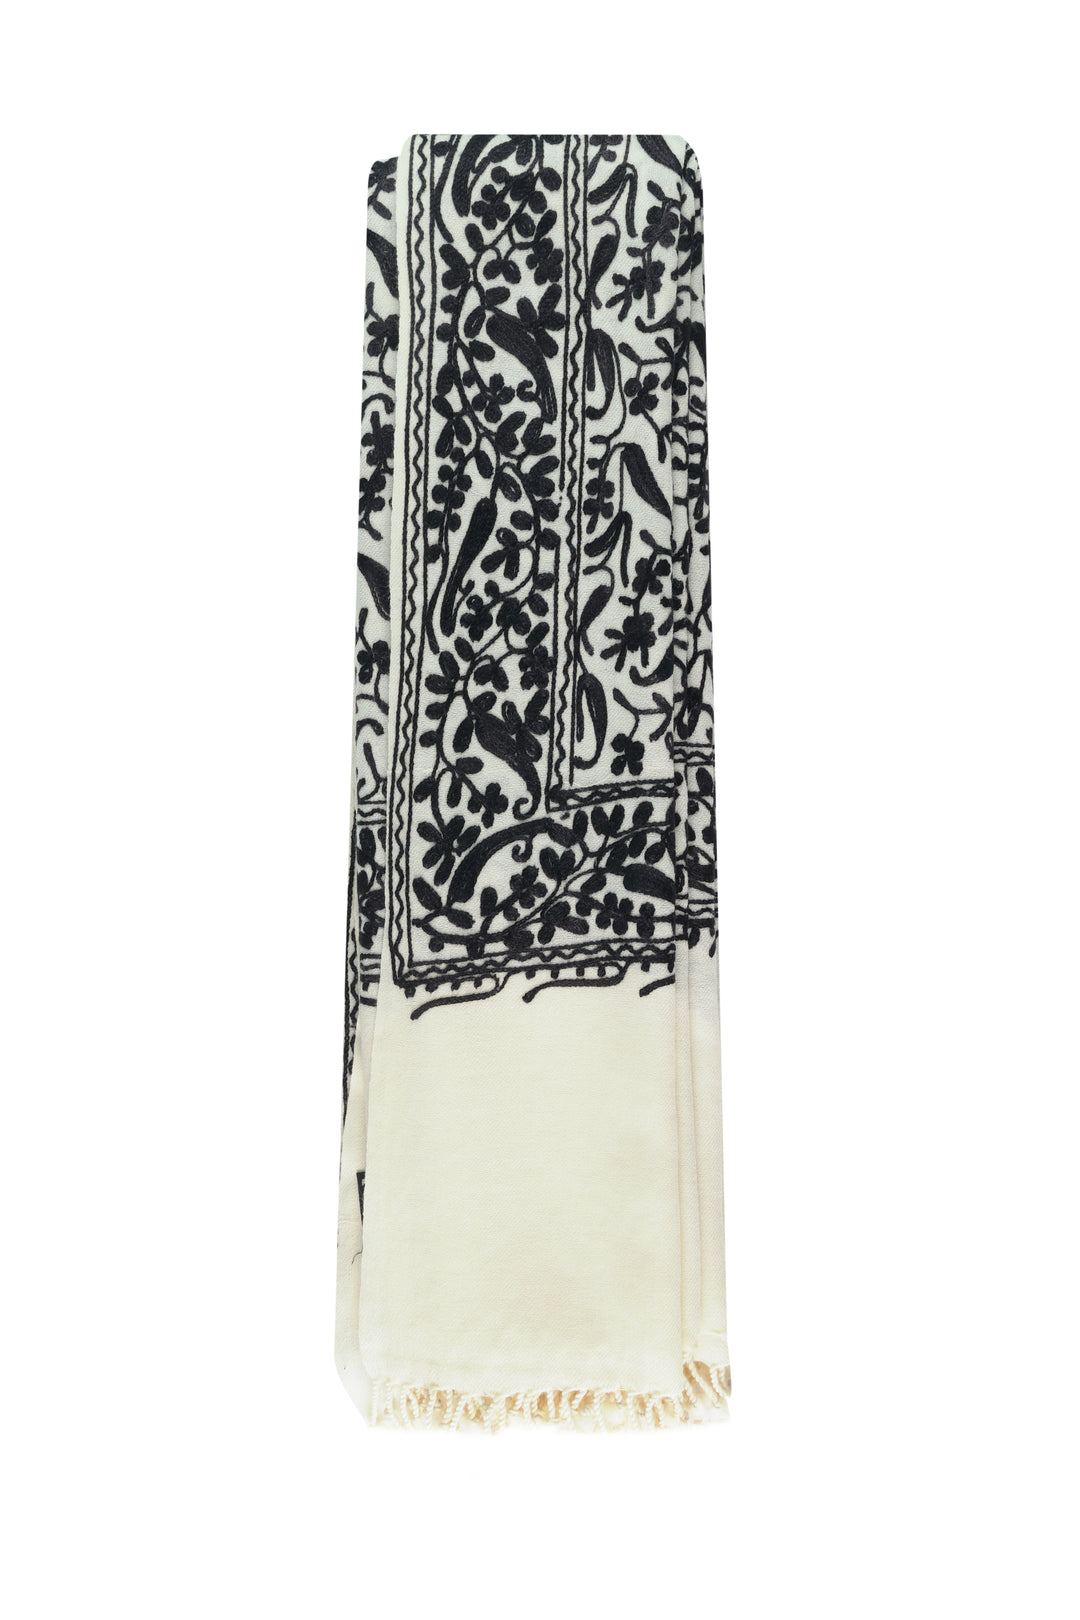 Cashmere Wool Shawl in Elegant Off-White